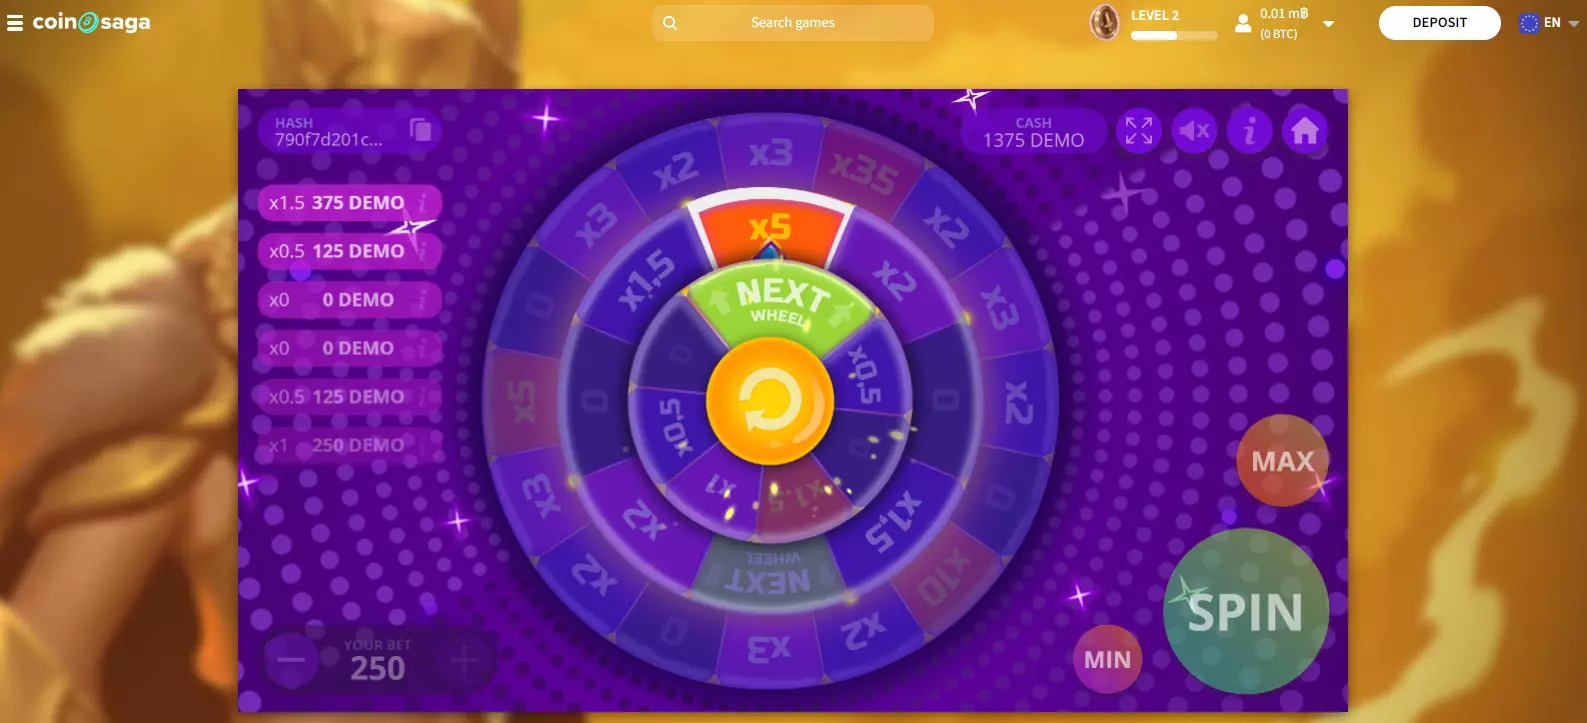 Magic Wheel Casino Game x5 Multiplier Win